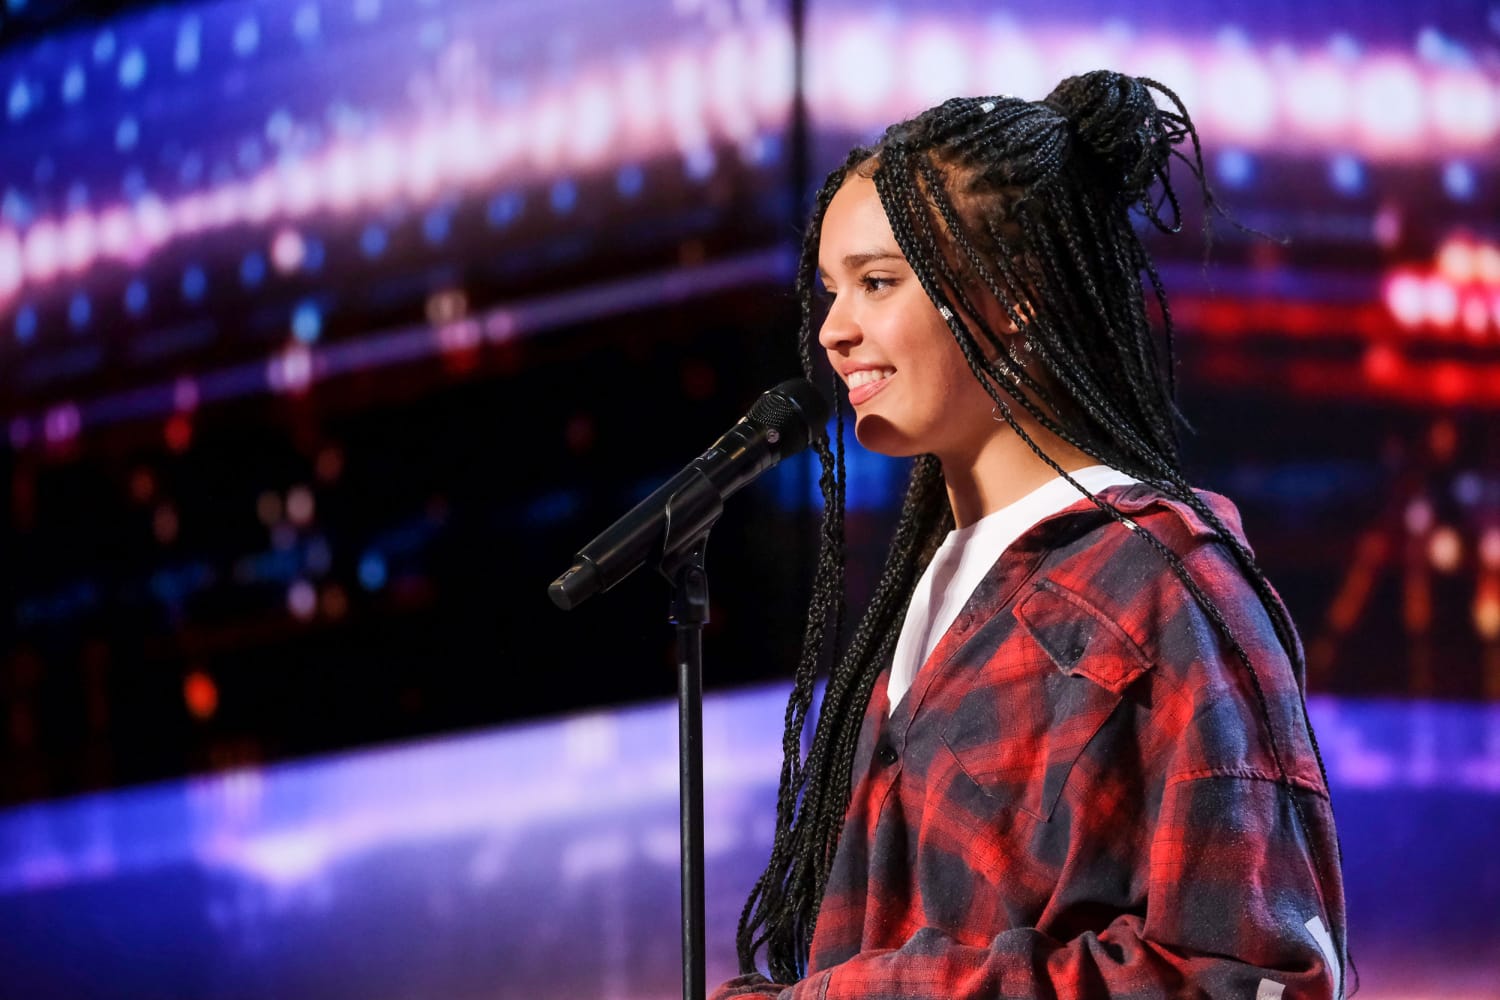 Polish Singer Sara James Gets Golden Buzzer on 'America's Got Talent'